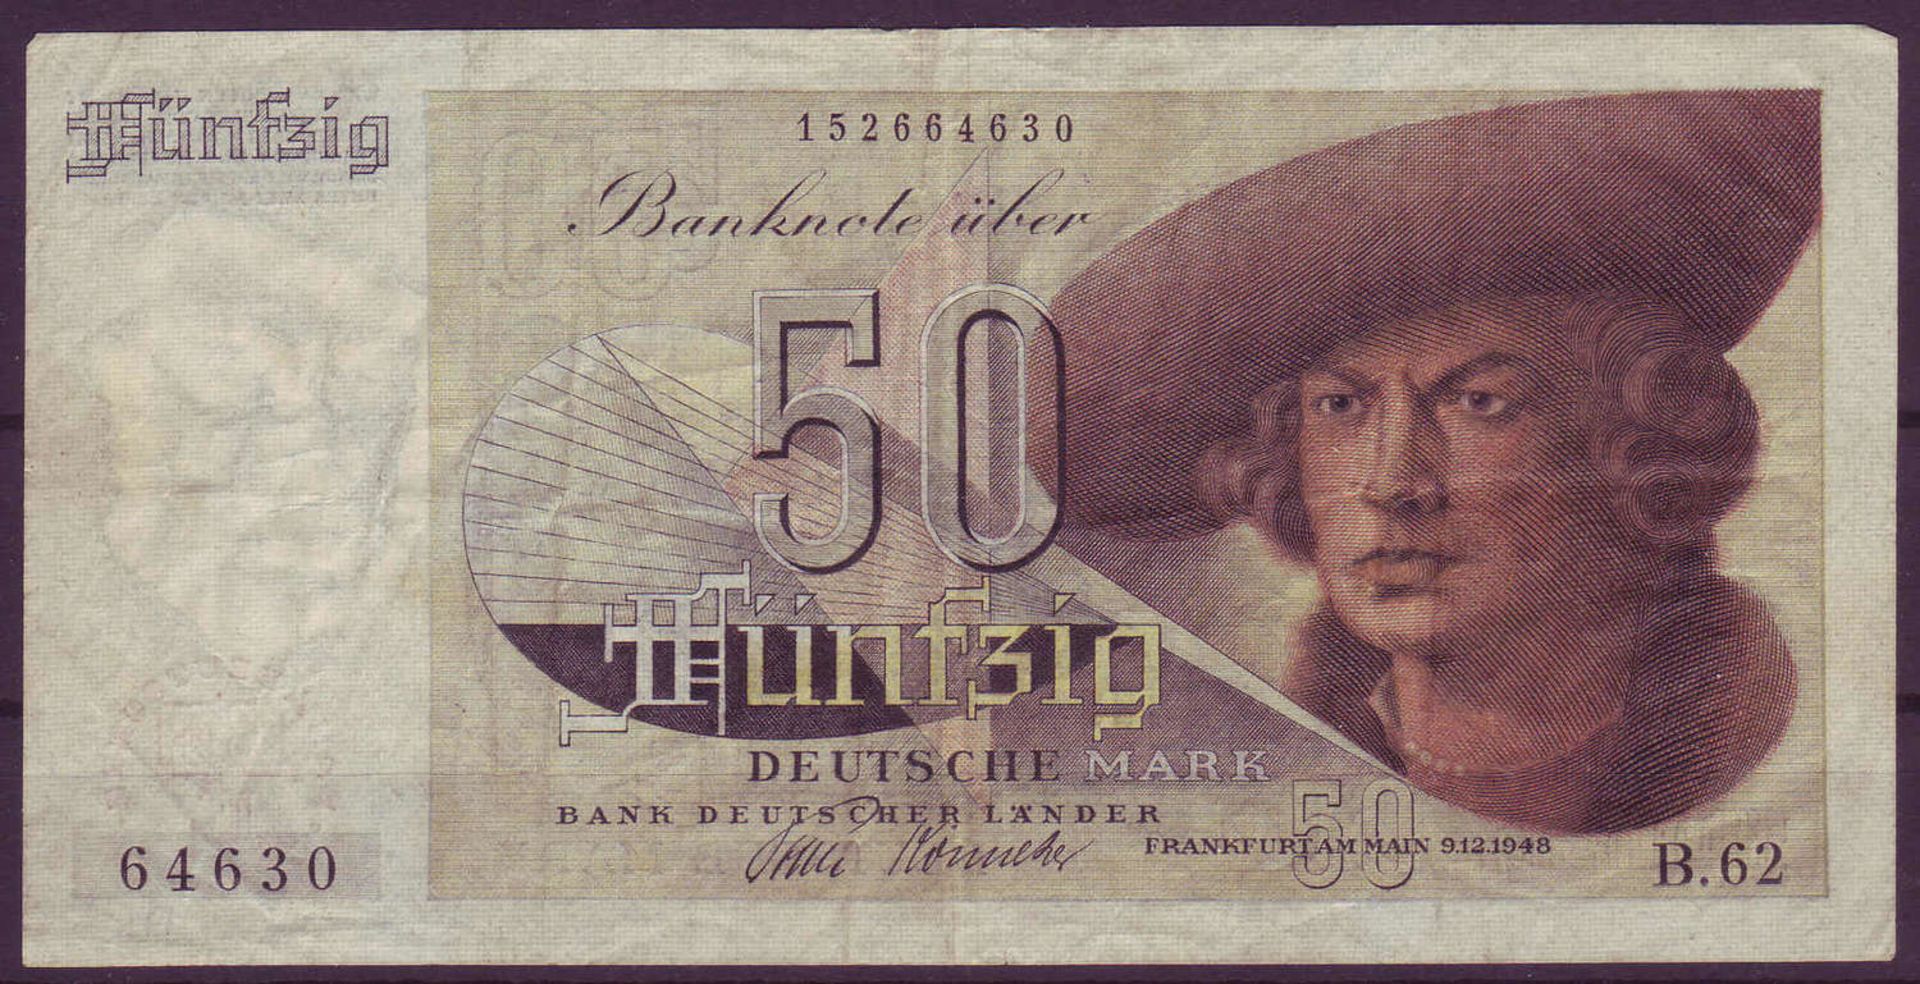 BRD, Bank deutscher Länder, 50 deutsche Mark. Rosenberg 254. Zustand: II -III.FRG, Bank of German